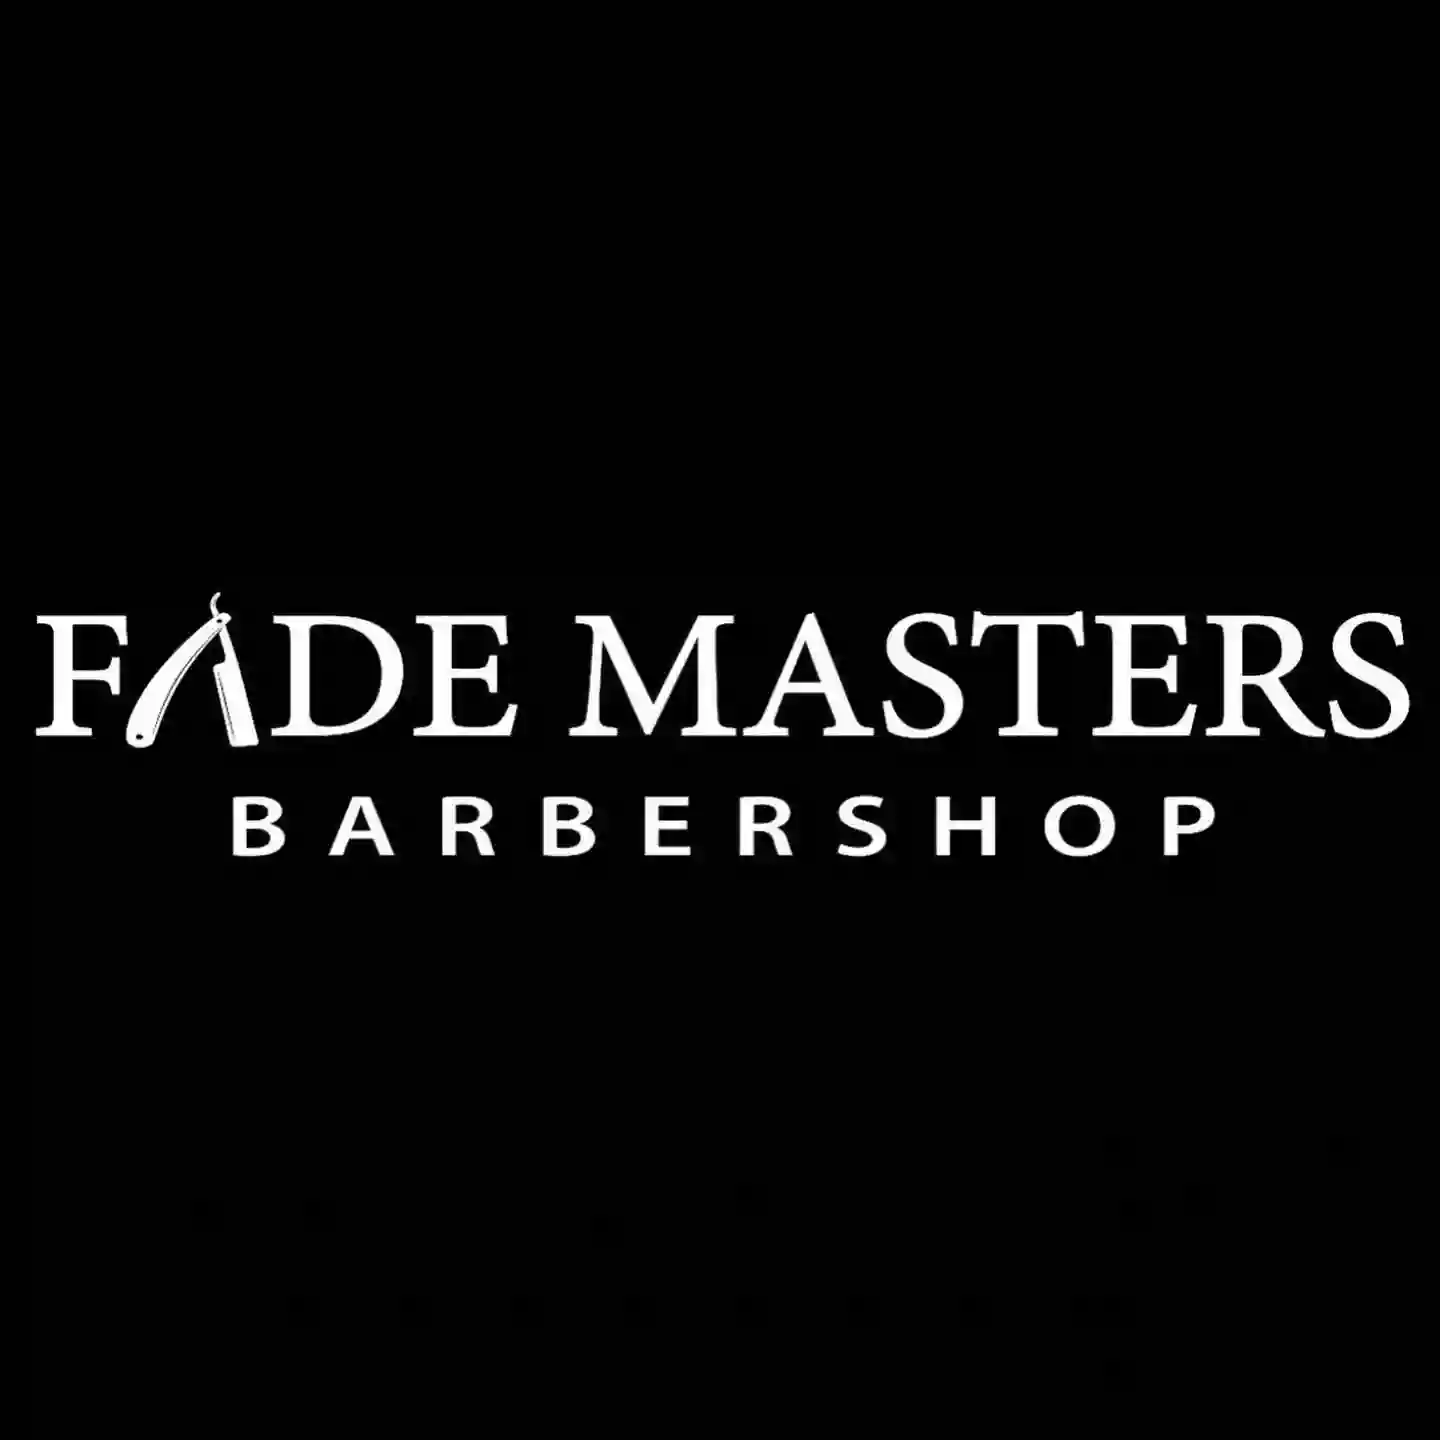 Fade Masters Barbershop